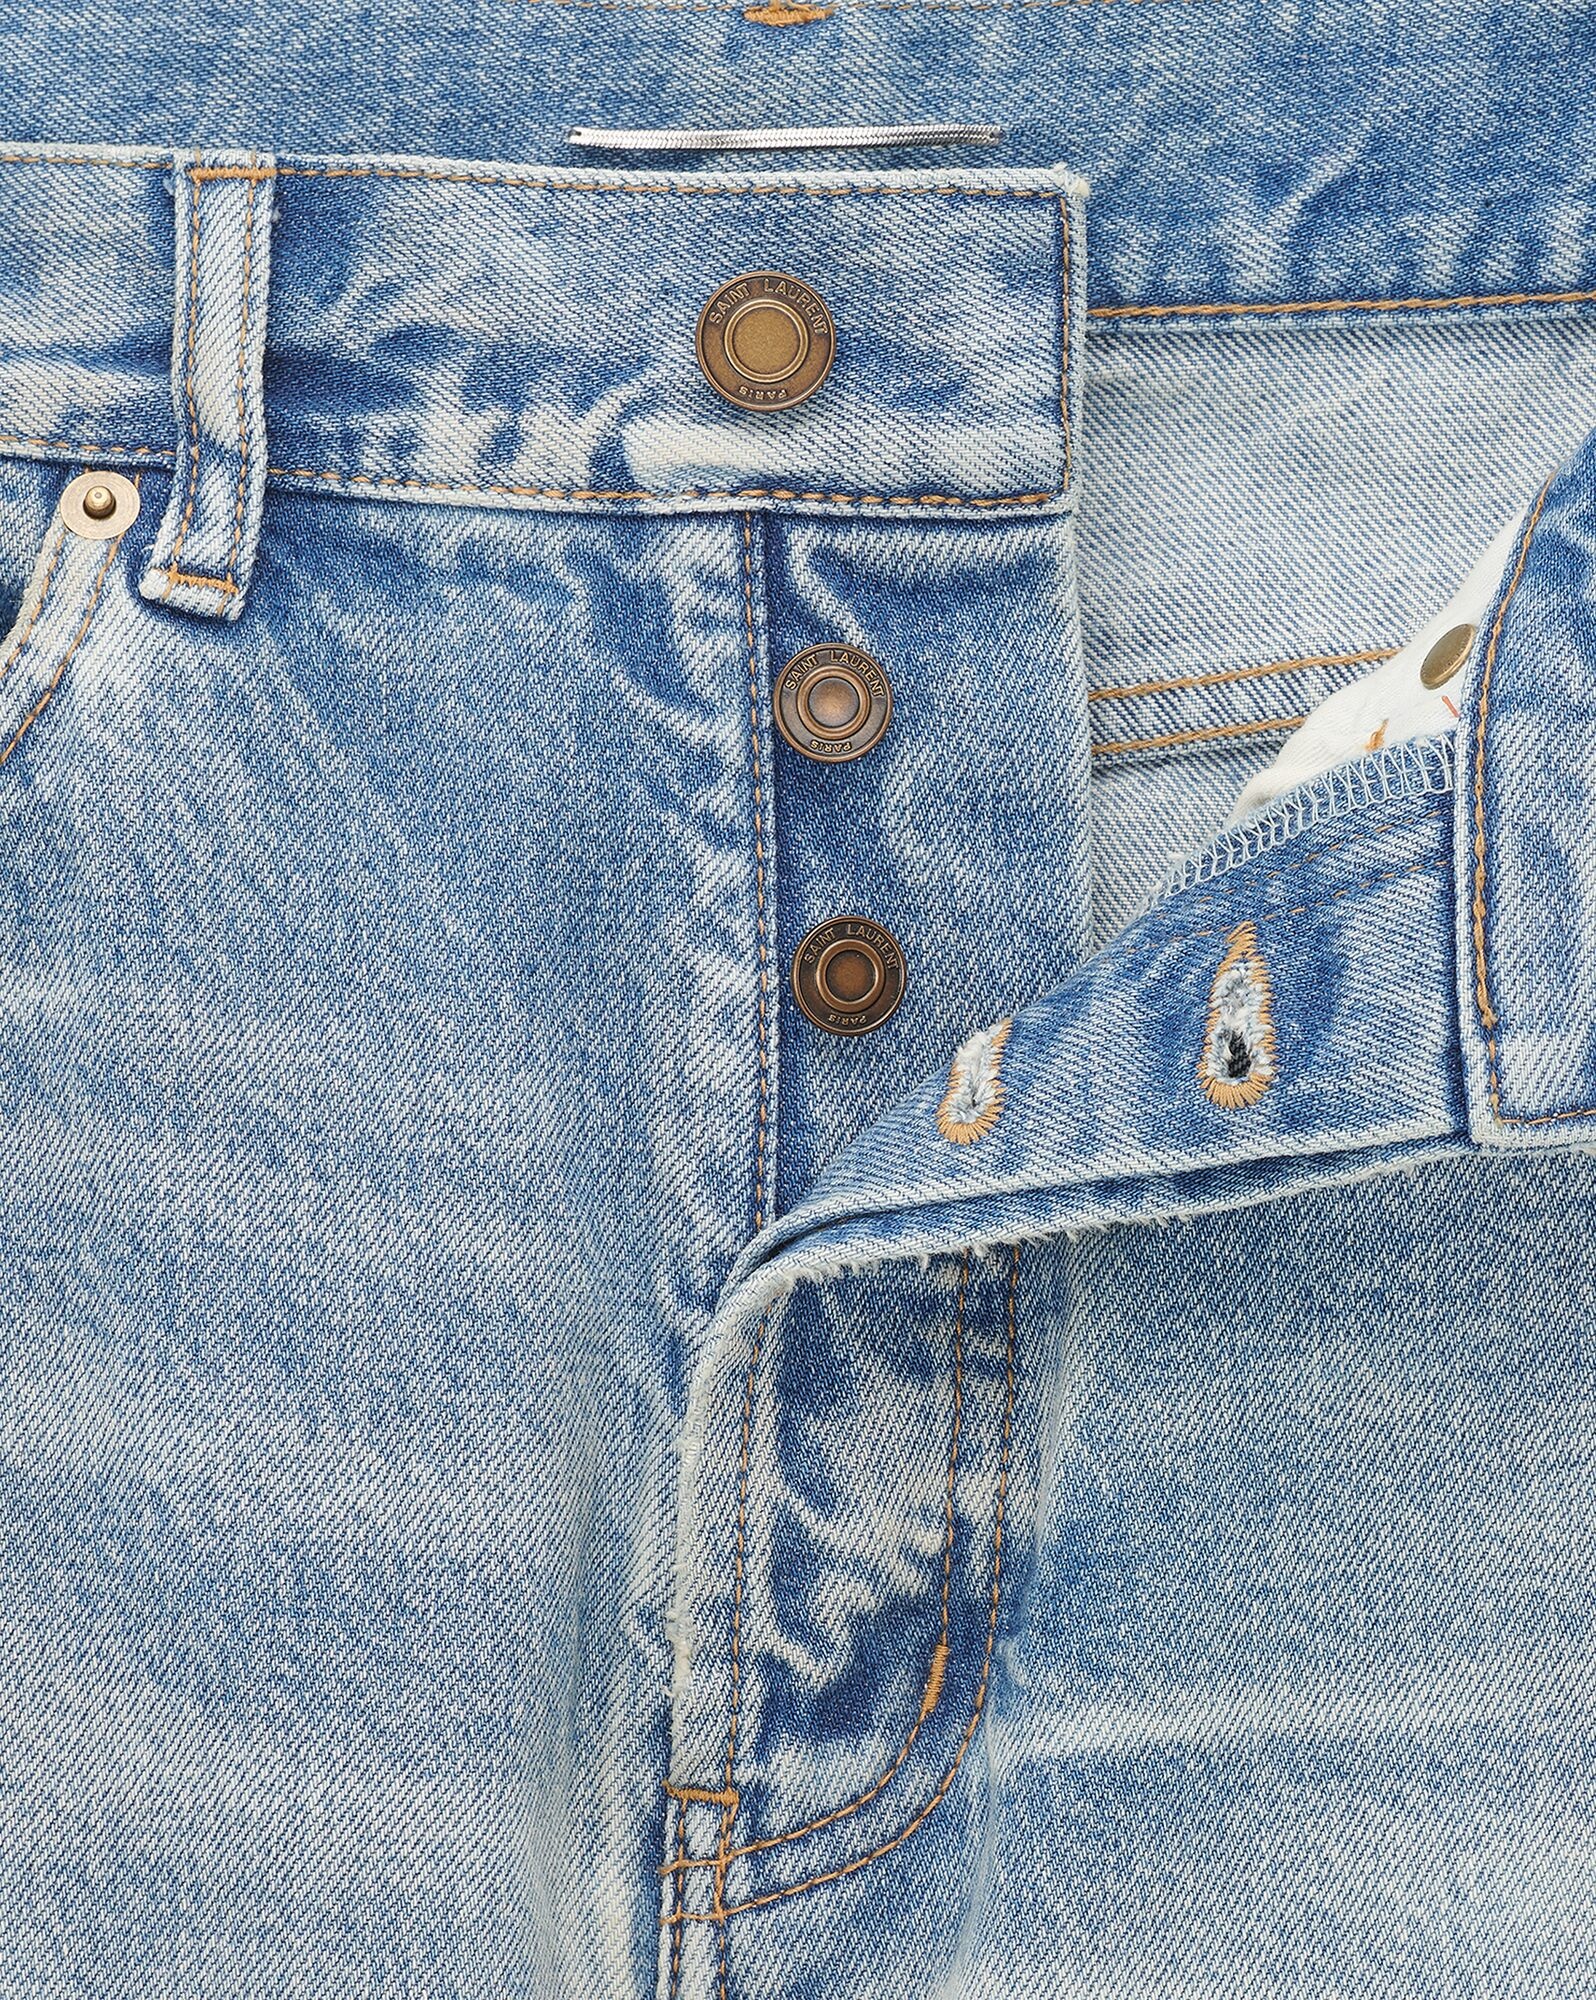 cropped jeans in sunny sky blue denim - 3